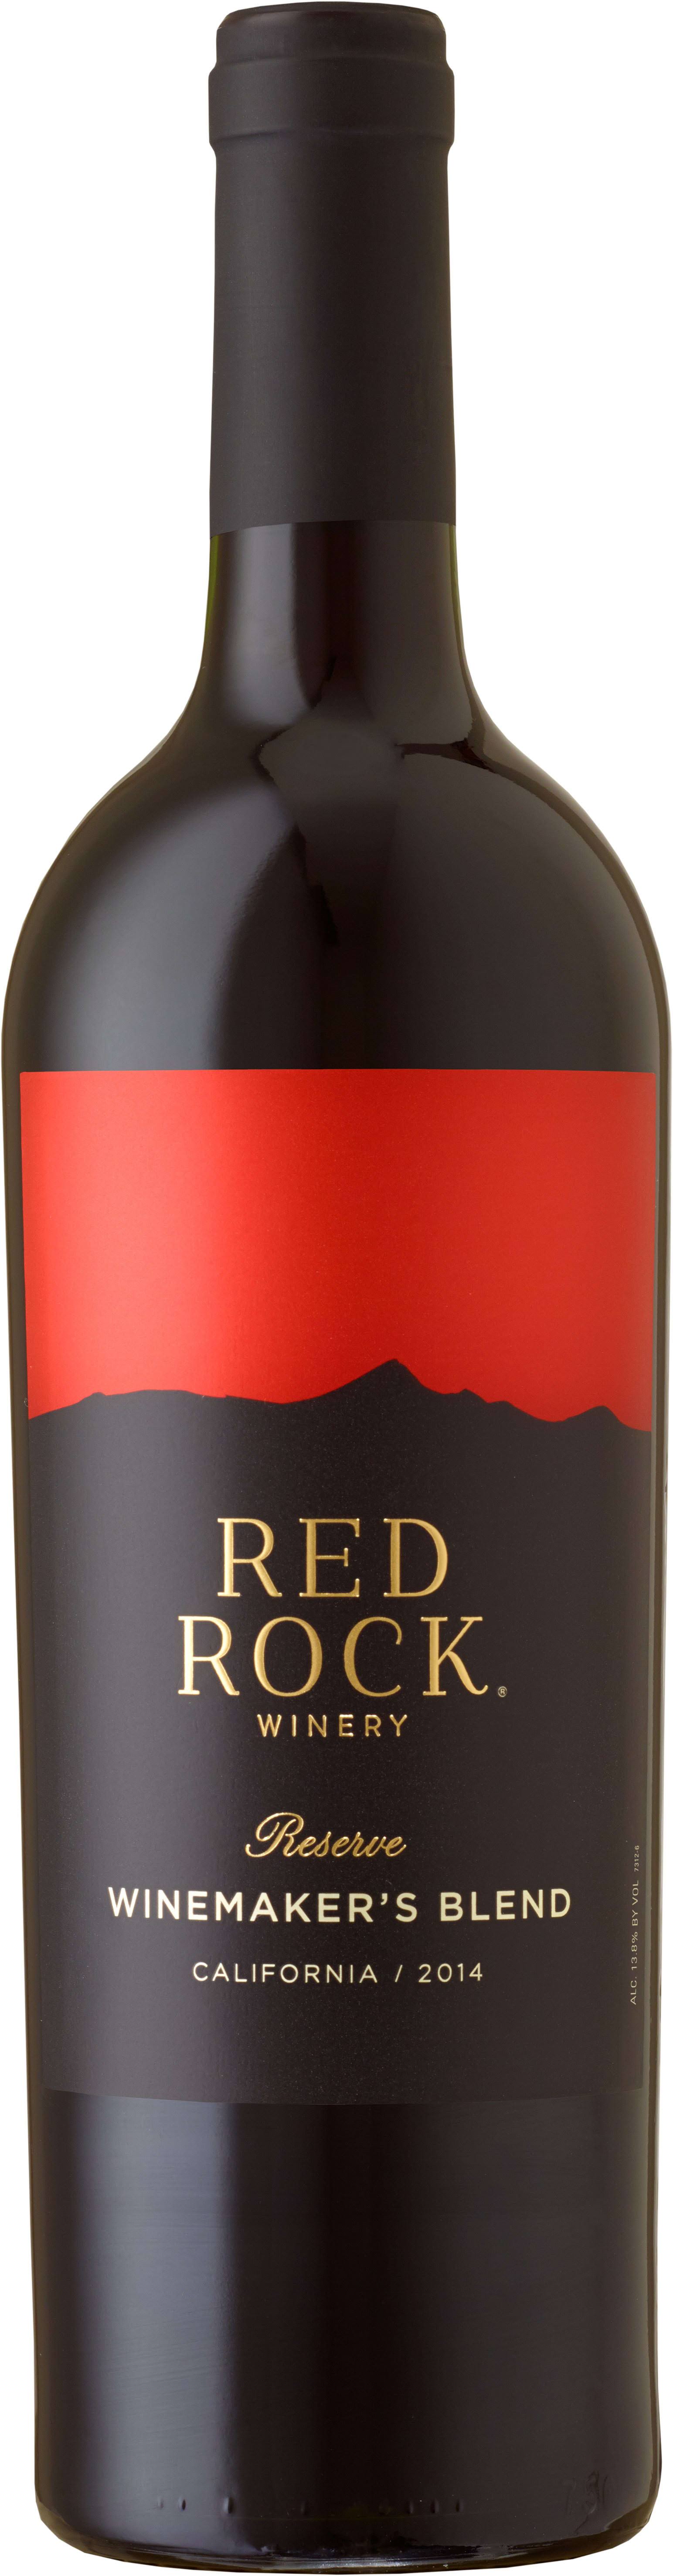 Red Rock Winemaker's Blend Reserve 2010 - 750ml